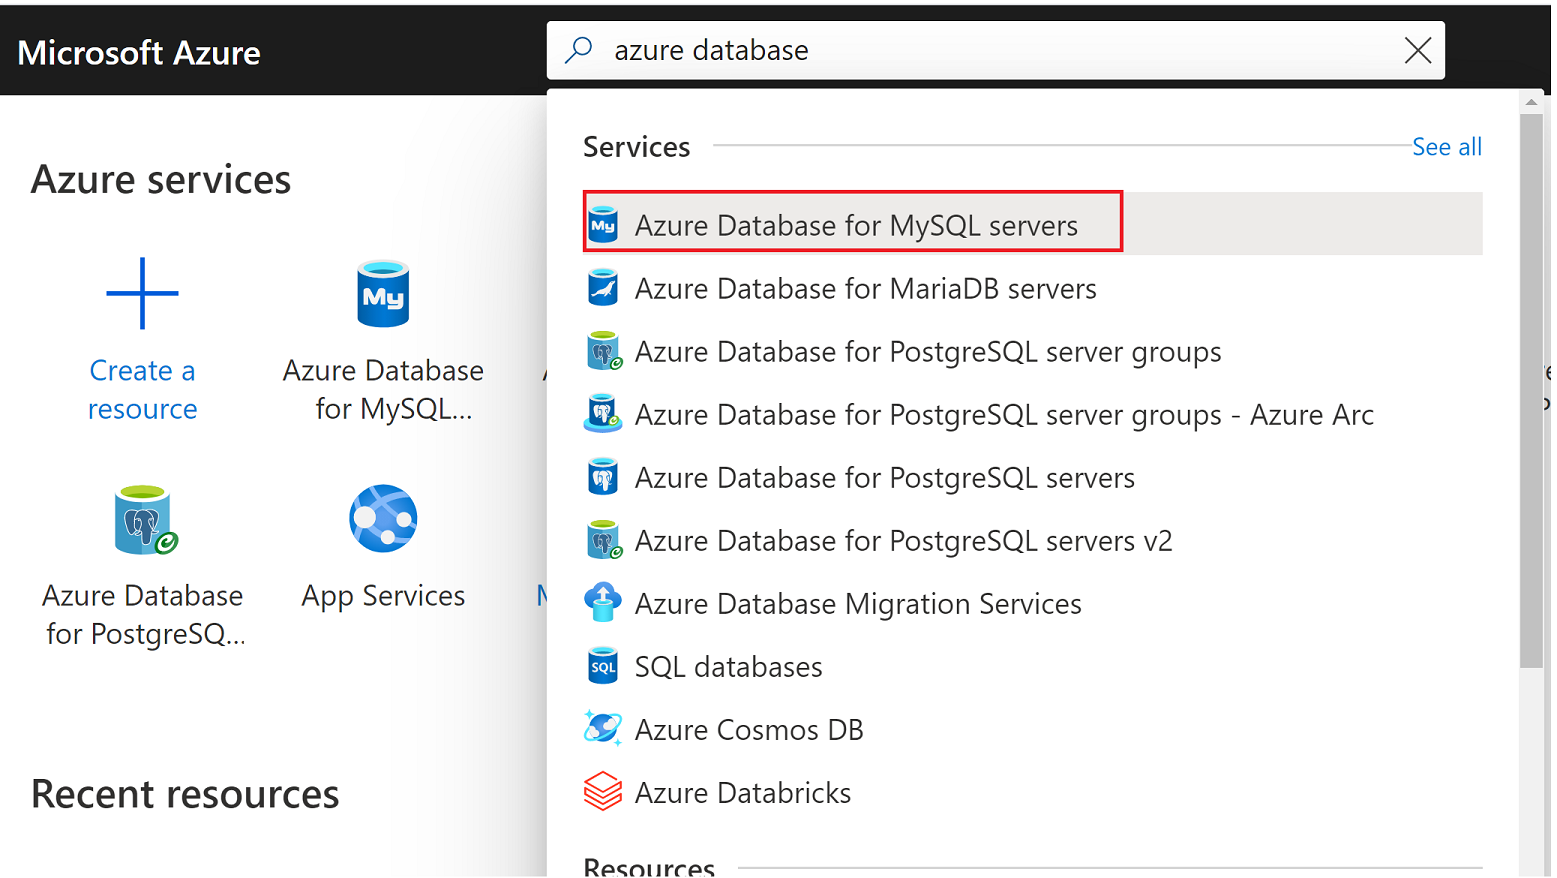 [Azure Database for MySQL サーバー] の検索を示すスクリーンショット。